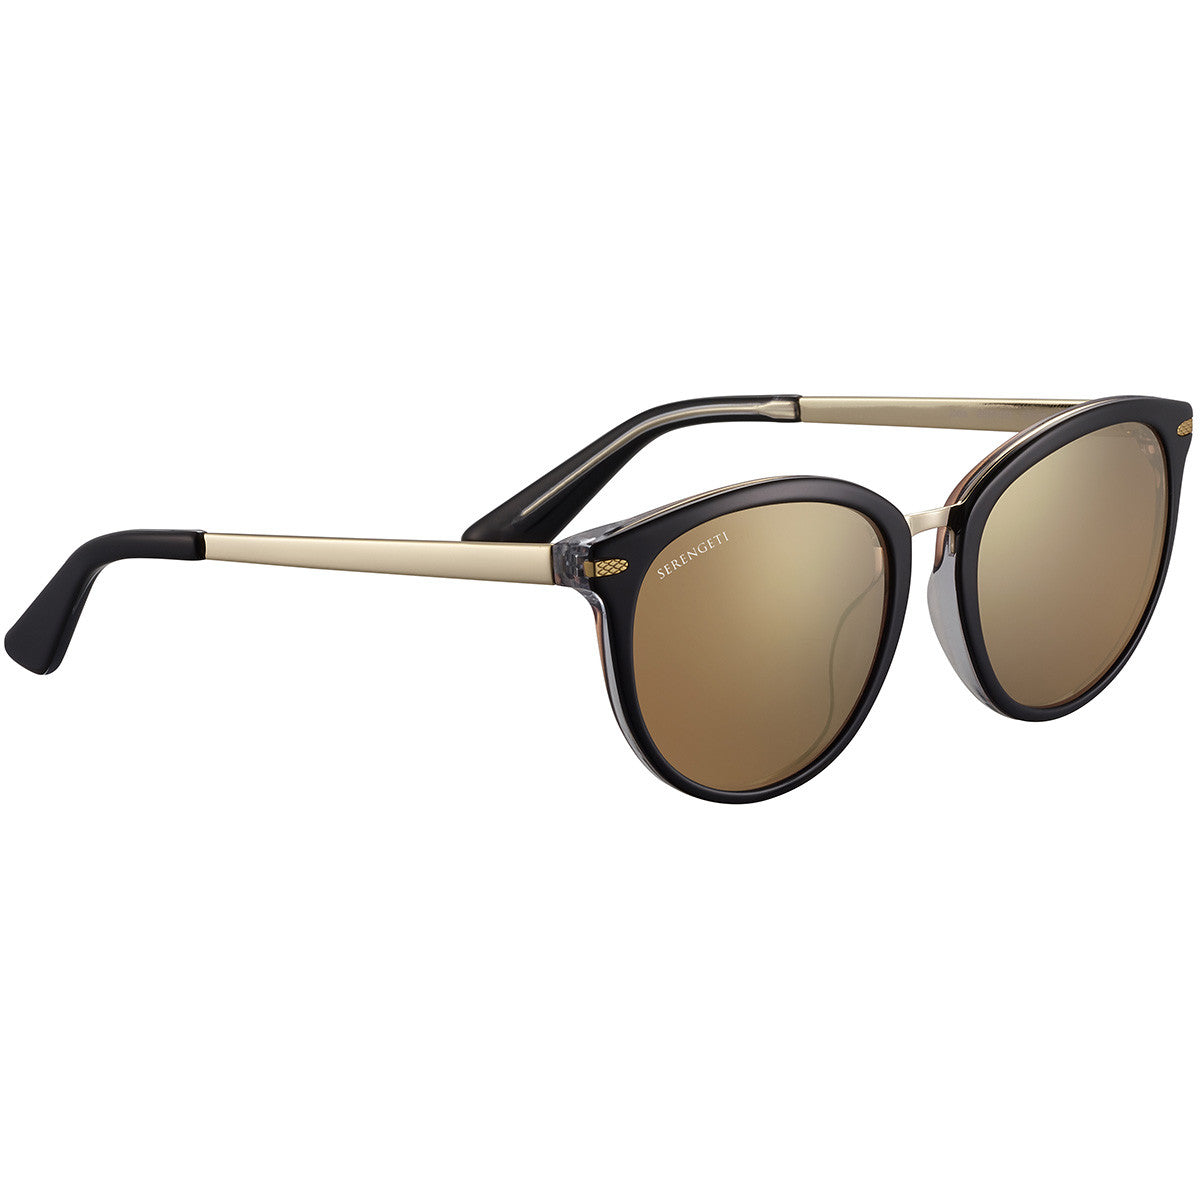 Serengeti Jodie Sunglasses  Shiny Black Transparent Layer Medium, One size